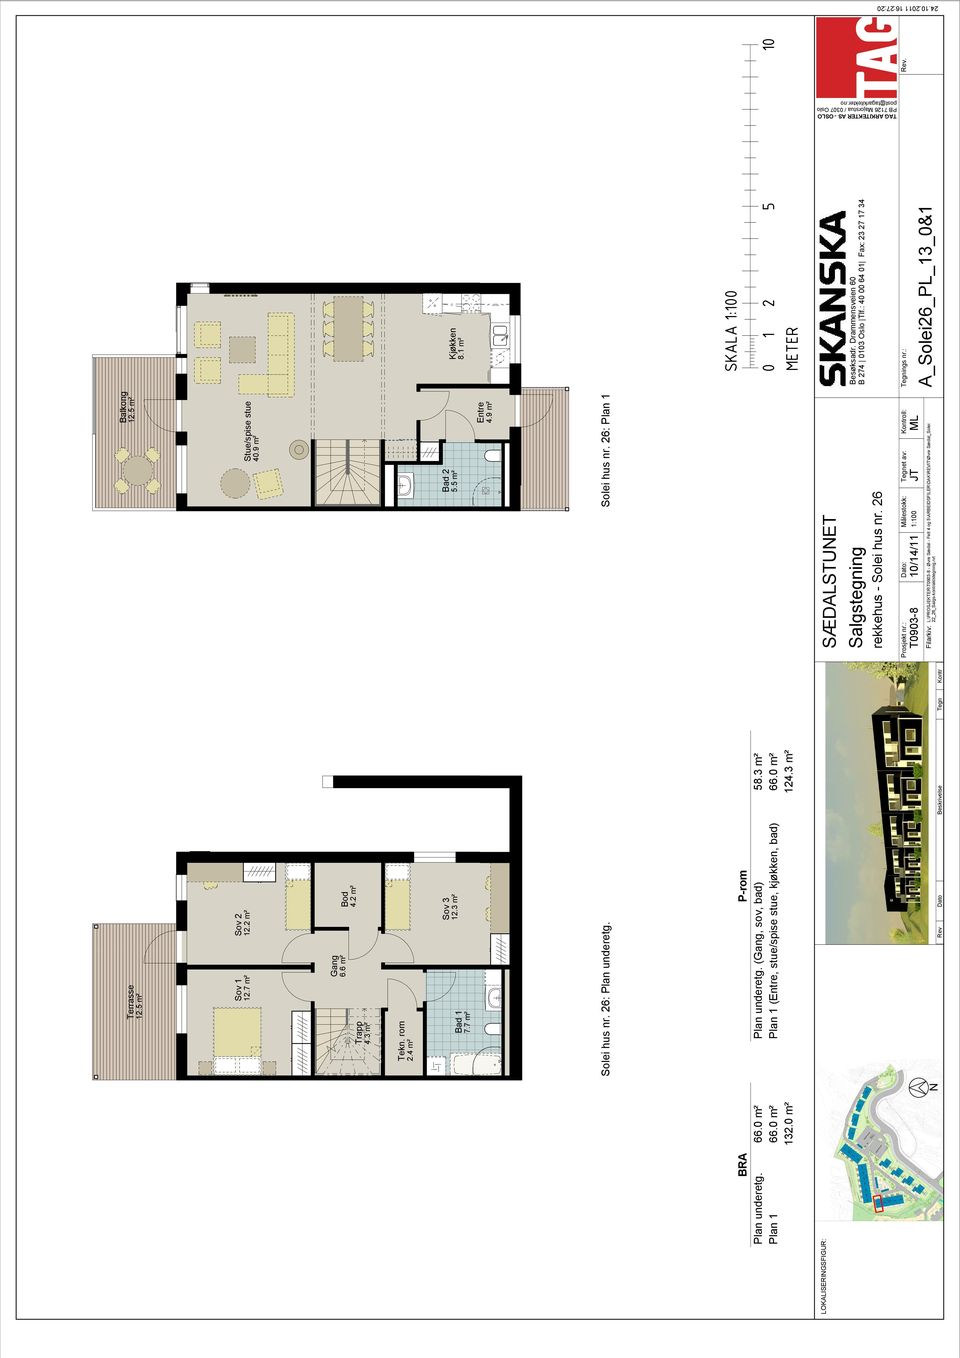 Solei hus nr. 26: Plan 1 P-rom Plan underetg. (Gang, sov, bad) 58.3 m² Plan 1 (Entre, stue/spise stue, kjøkken, bad) 66.